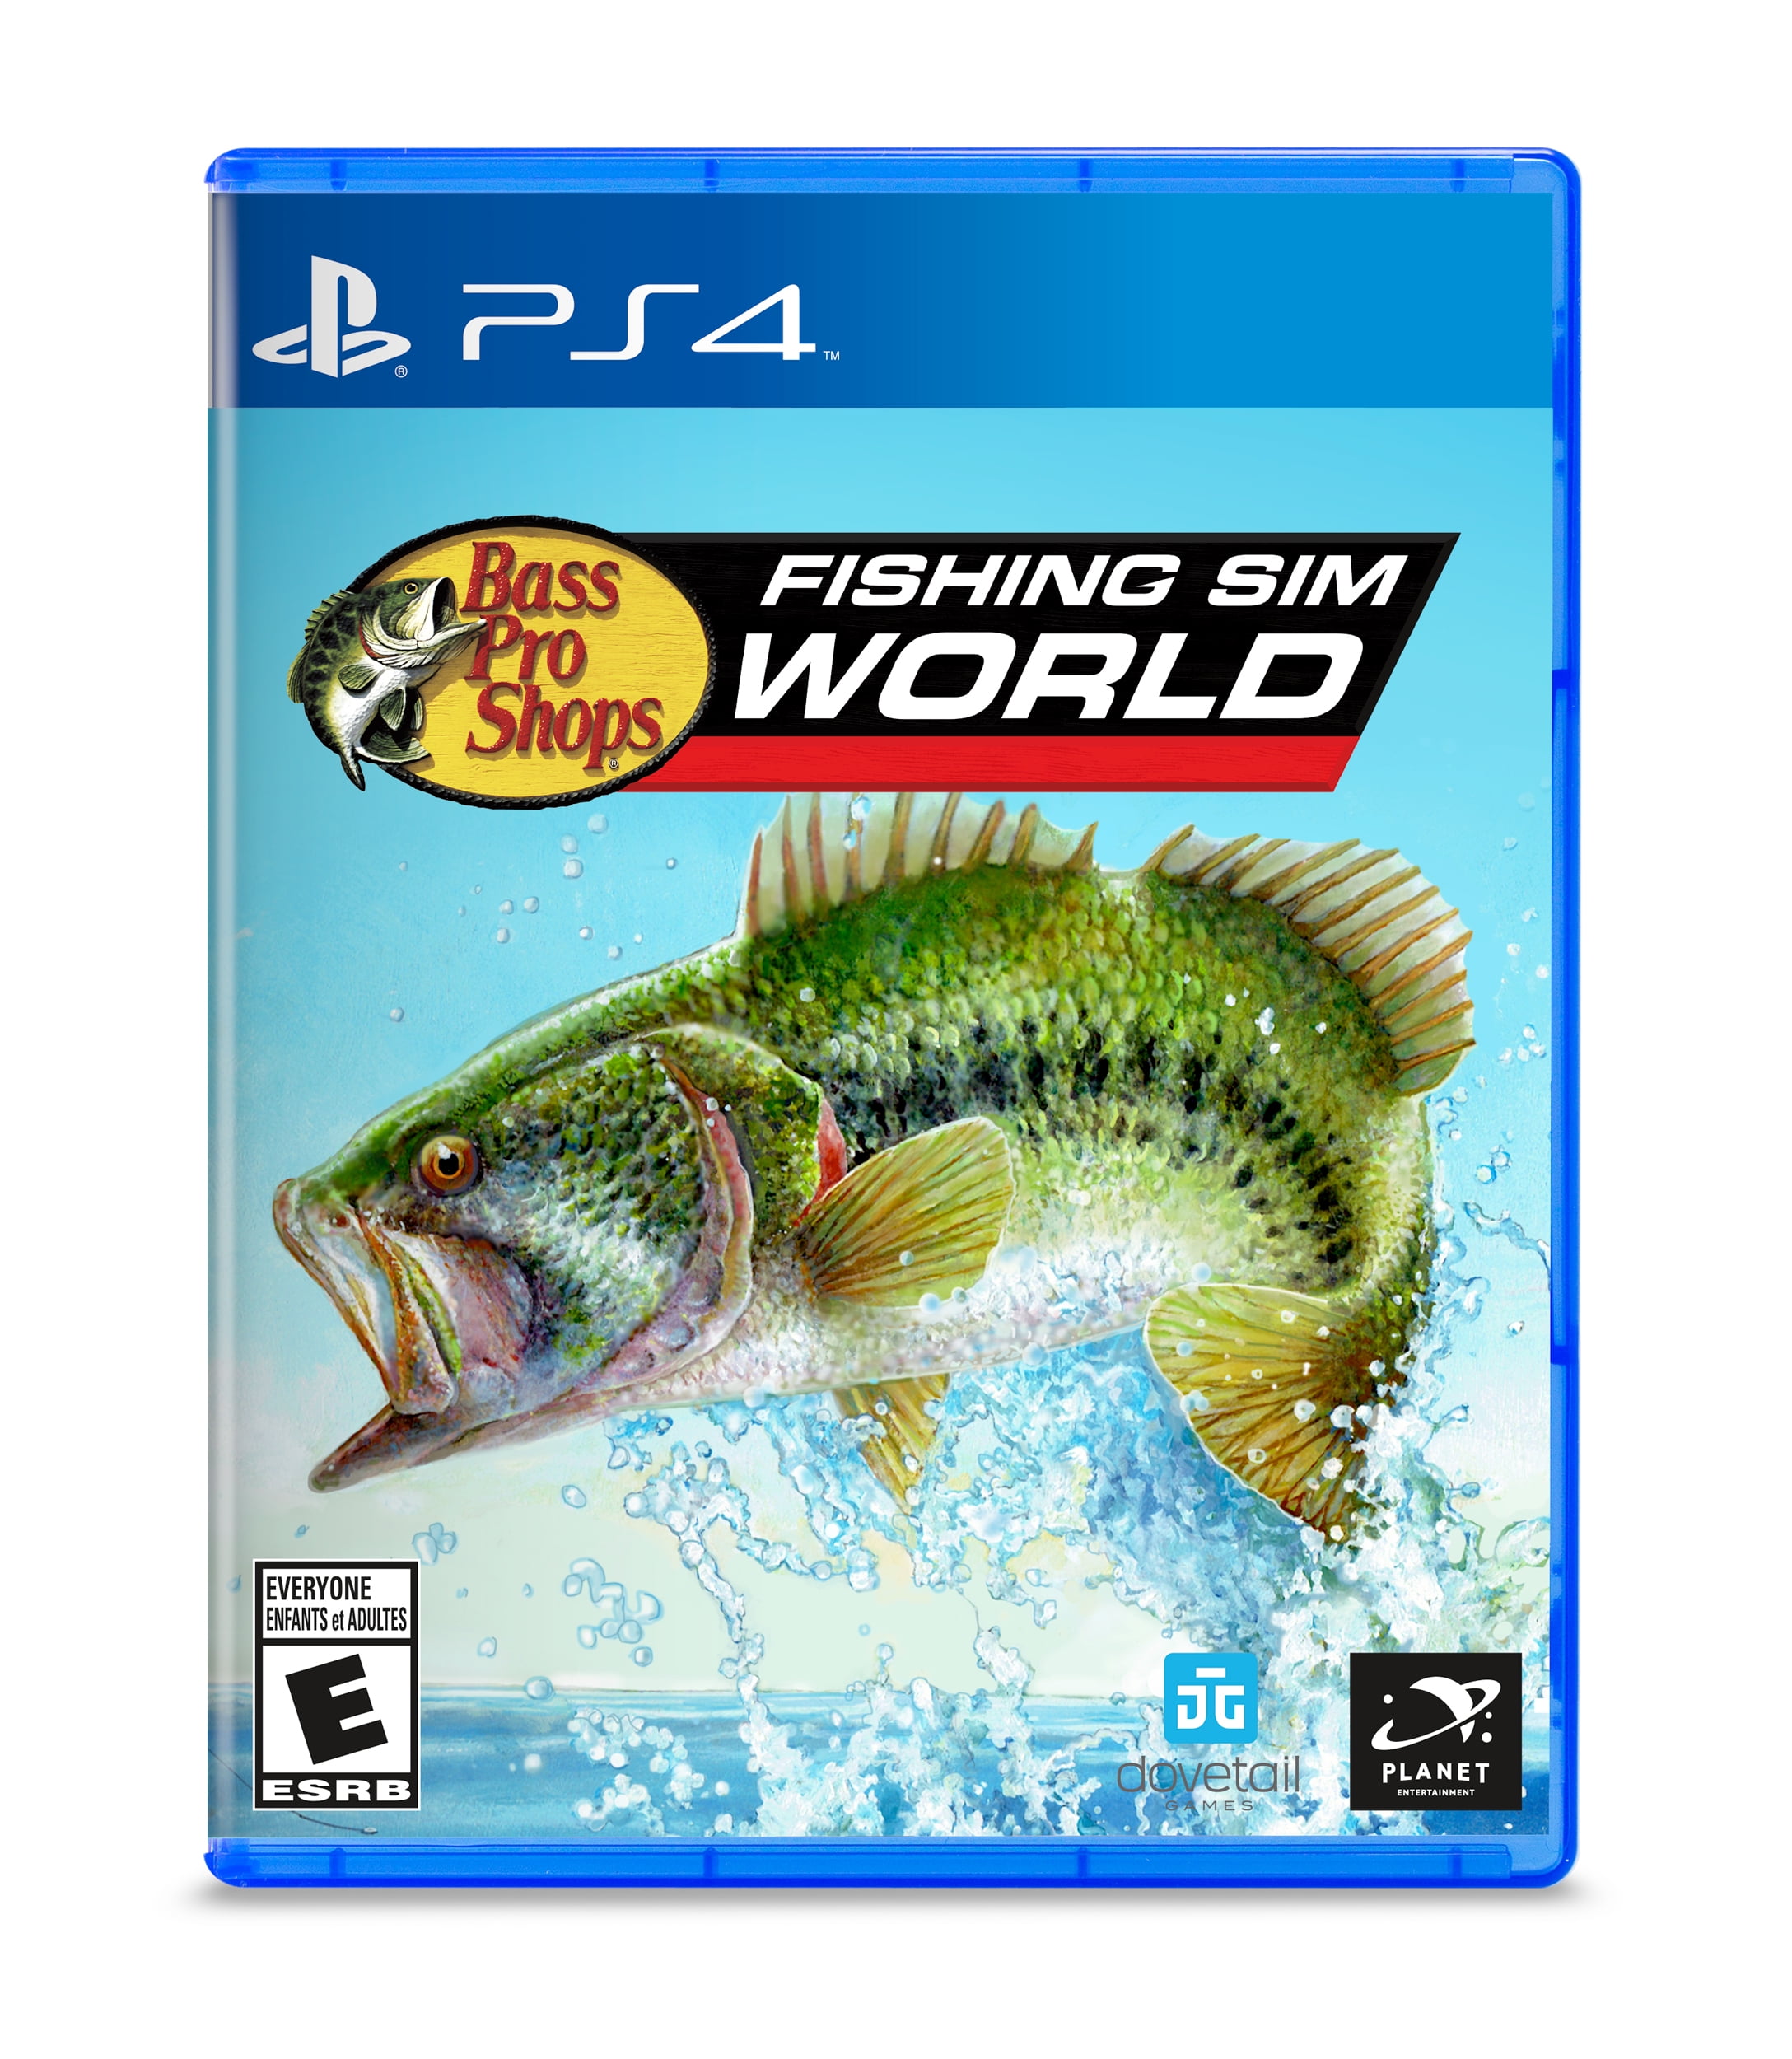 Bass Pro Shops Fishing Sim World, Planet Entertainment Llc, Xbox One,  Physical Edition 